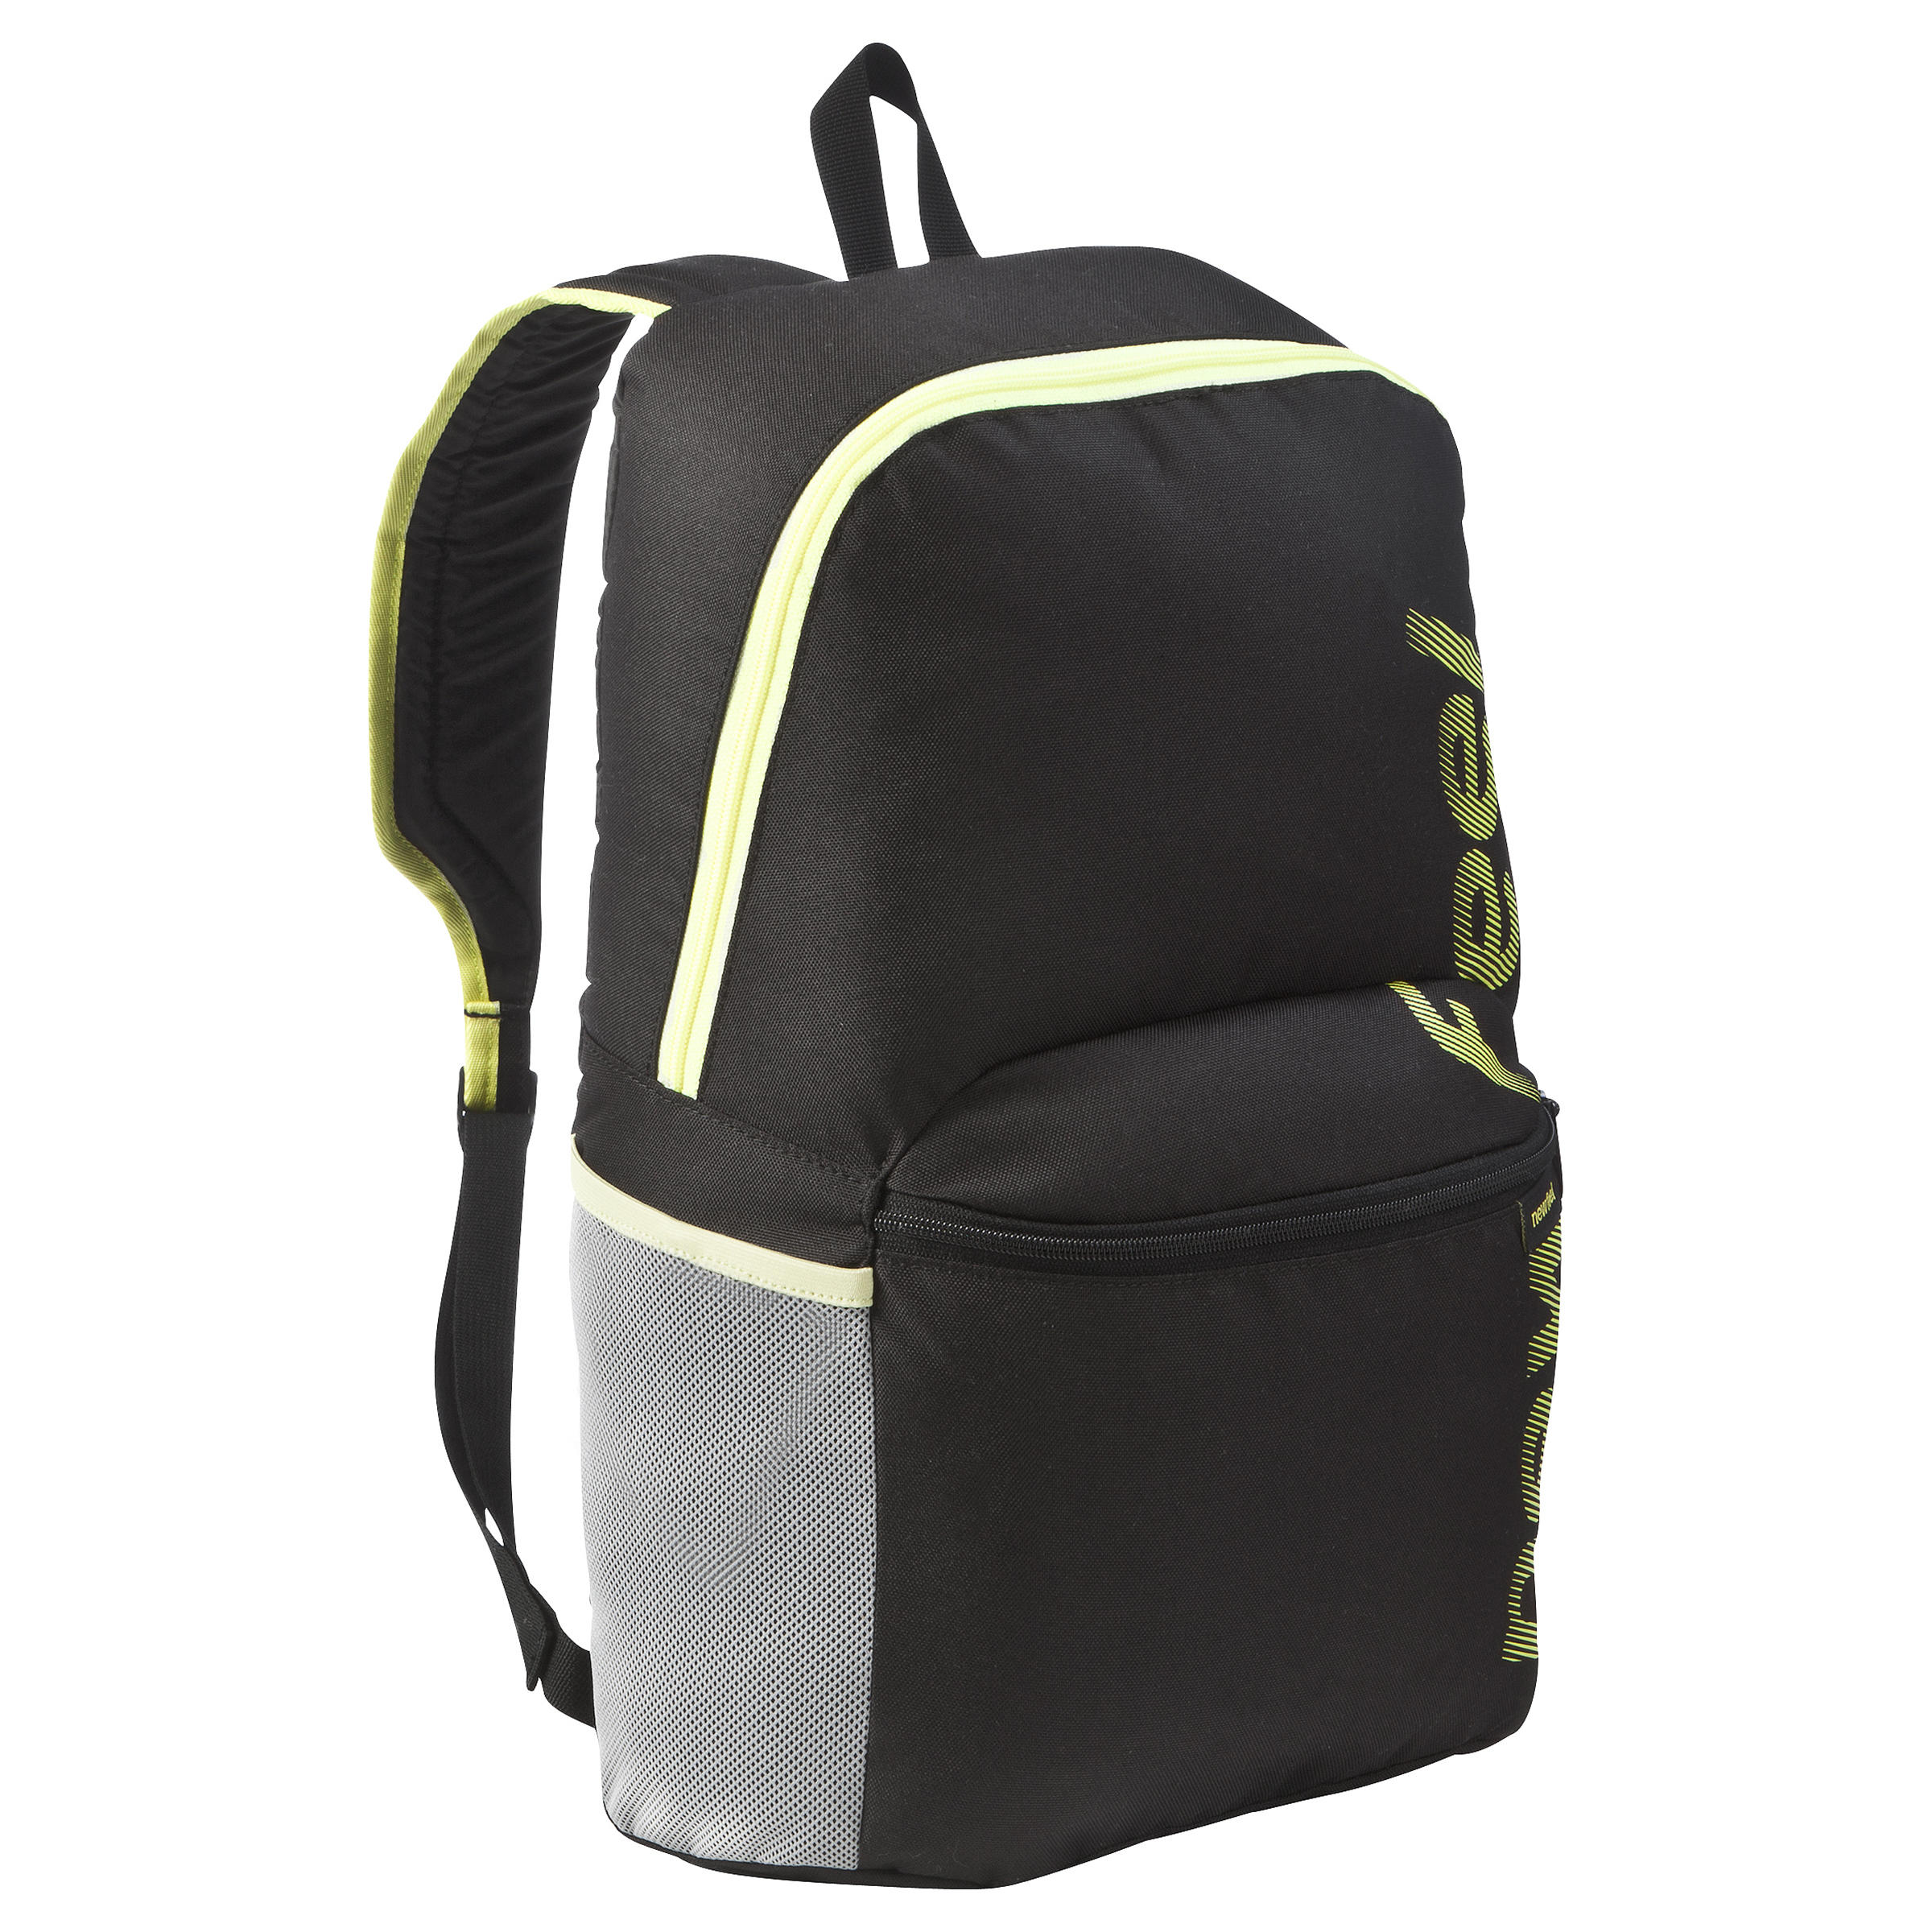 NEWFEEL Abeona 140 20L Backpack - Black/Yellow